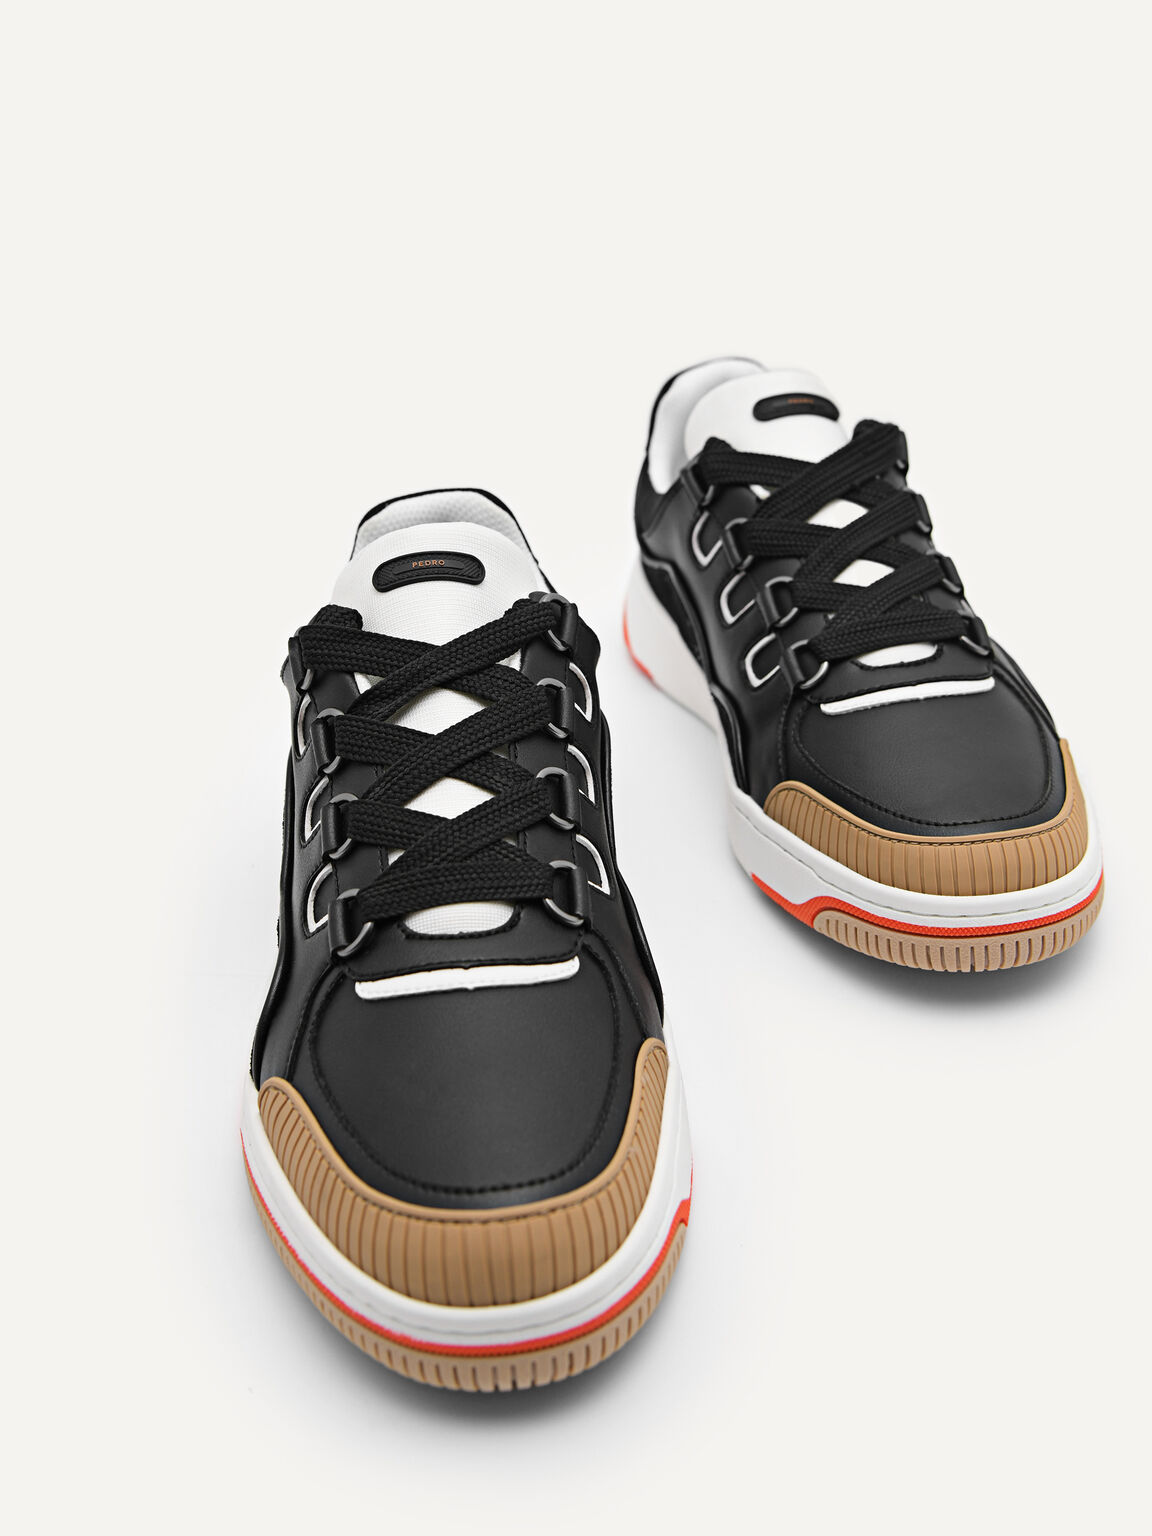 Monochrome Sneakers, Black